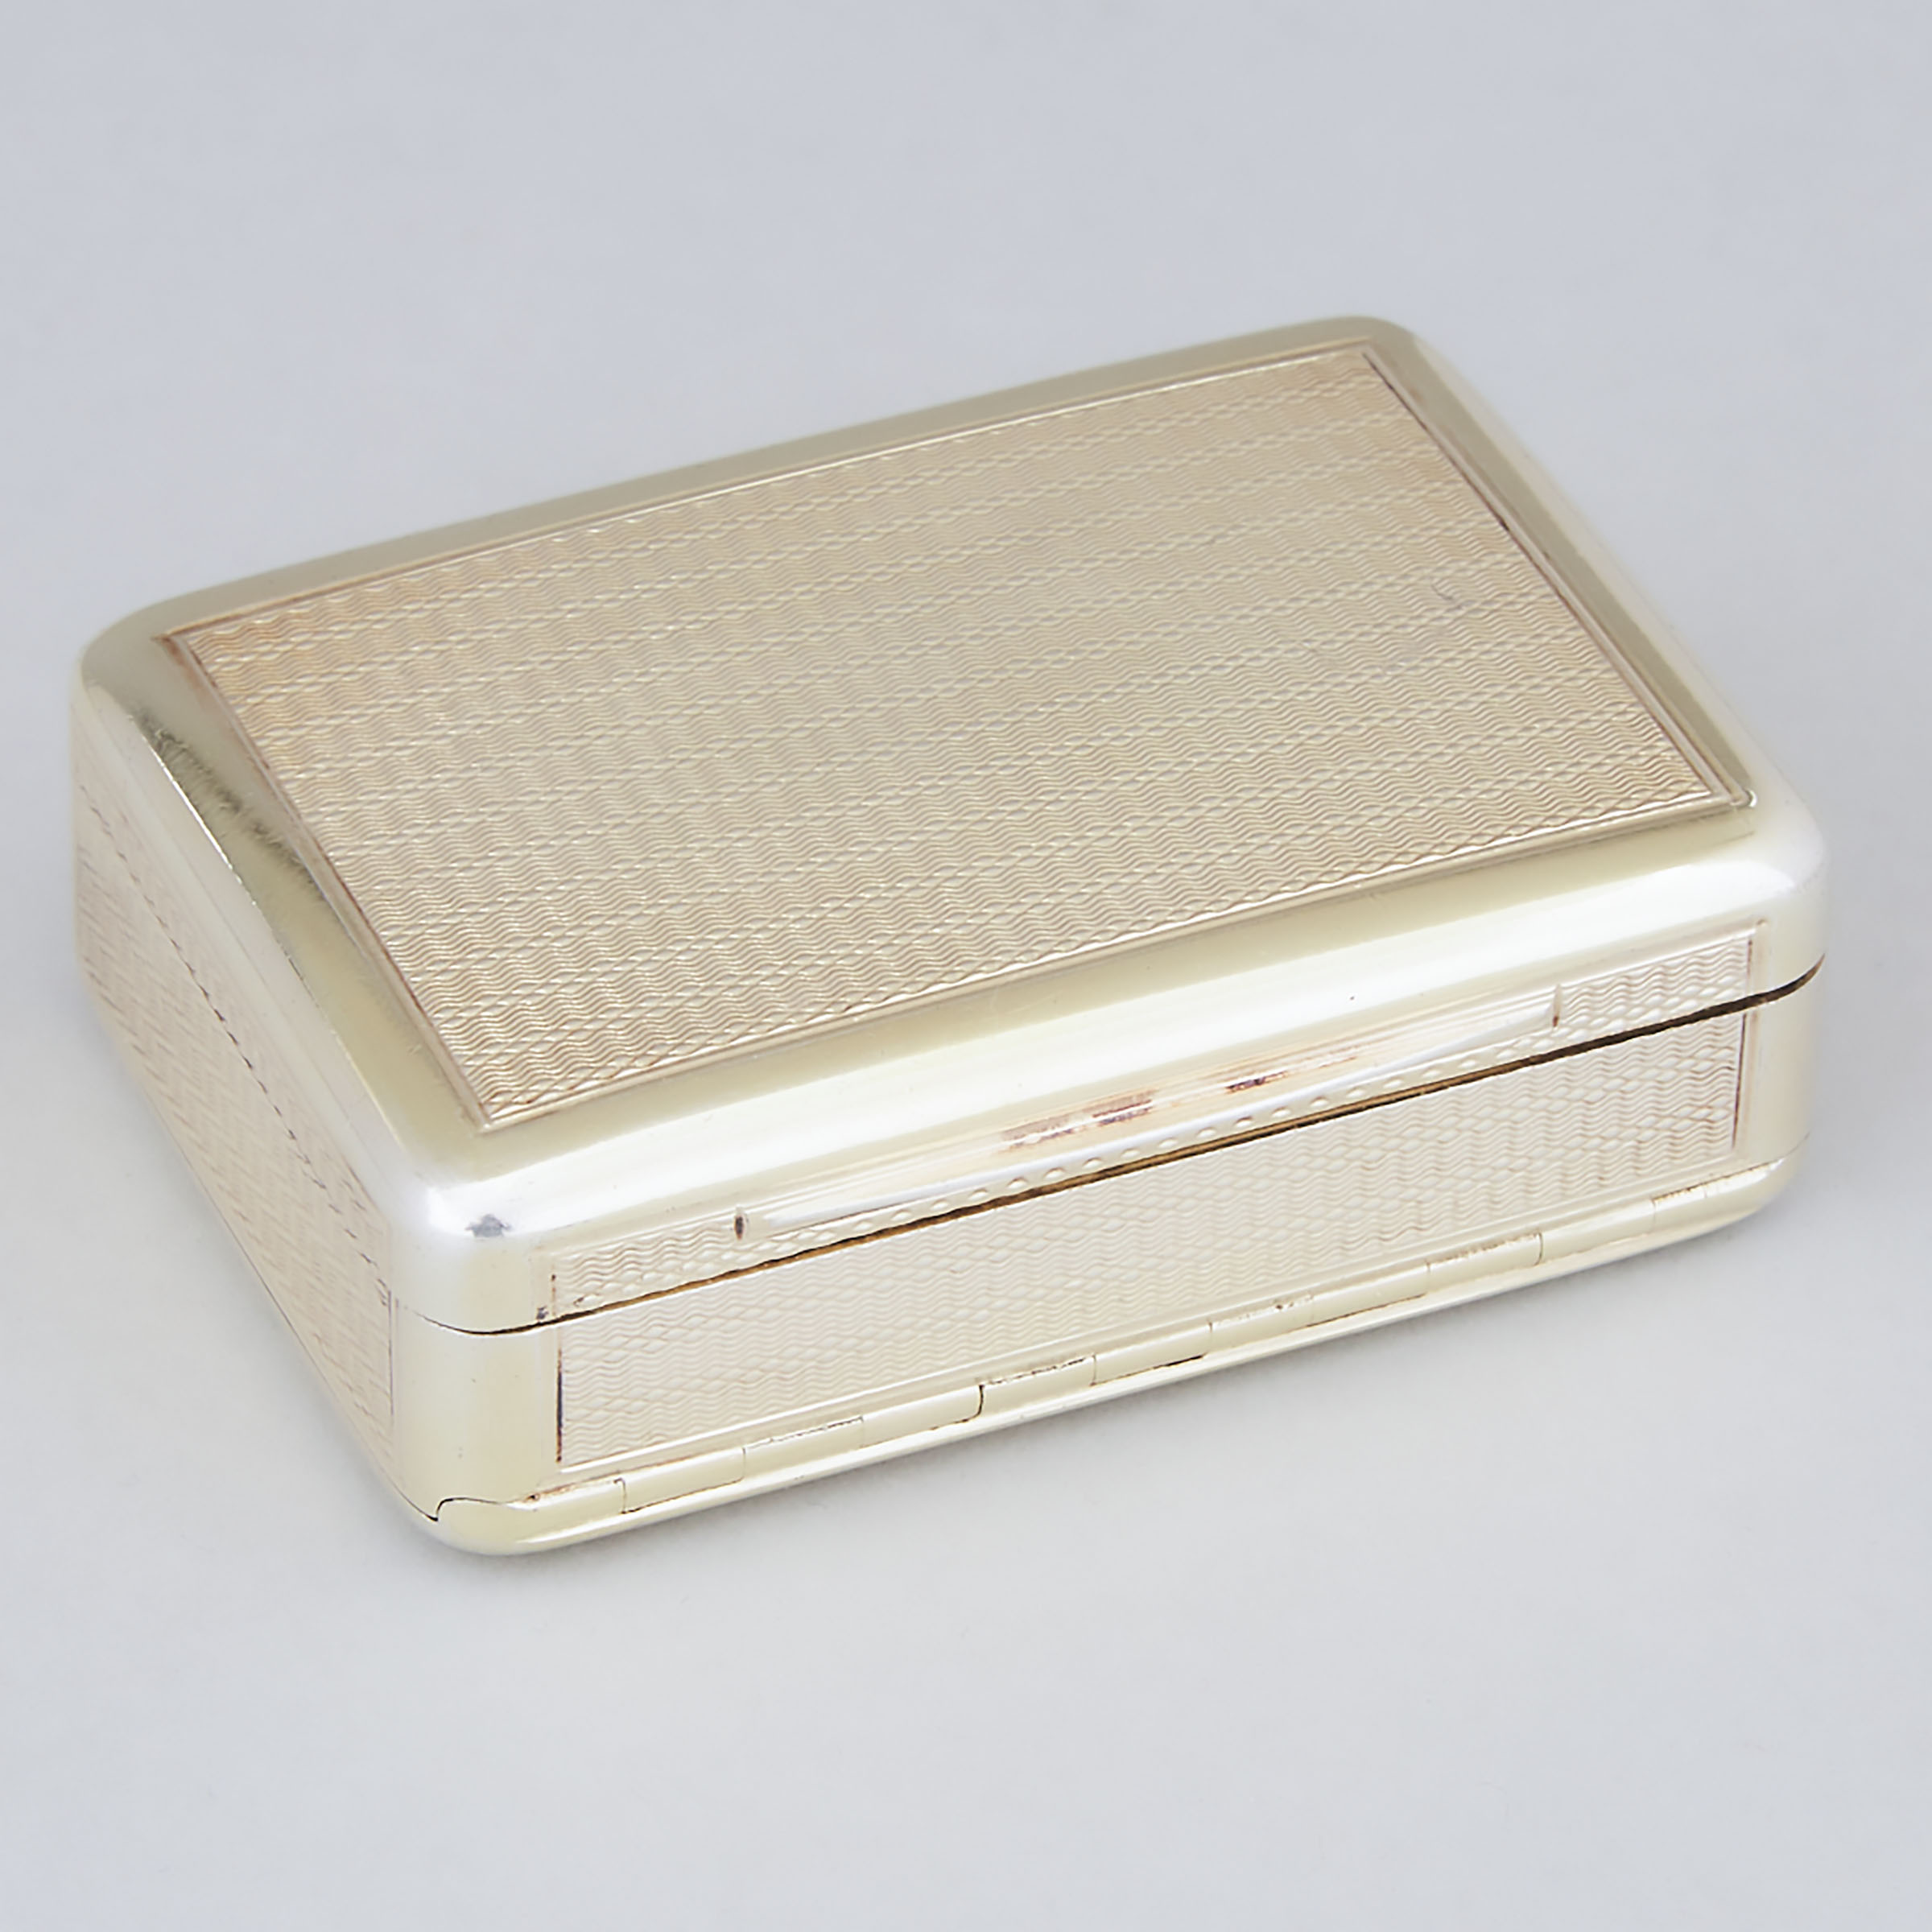 George III Silver-Gilt Two-Compartment Rectangular Snuff Box, Thomas Phipps & Edward Robinson, London, 1810